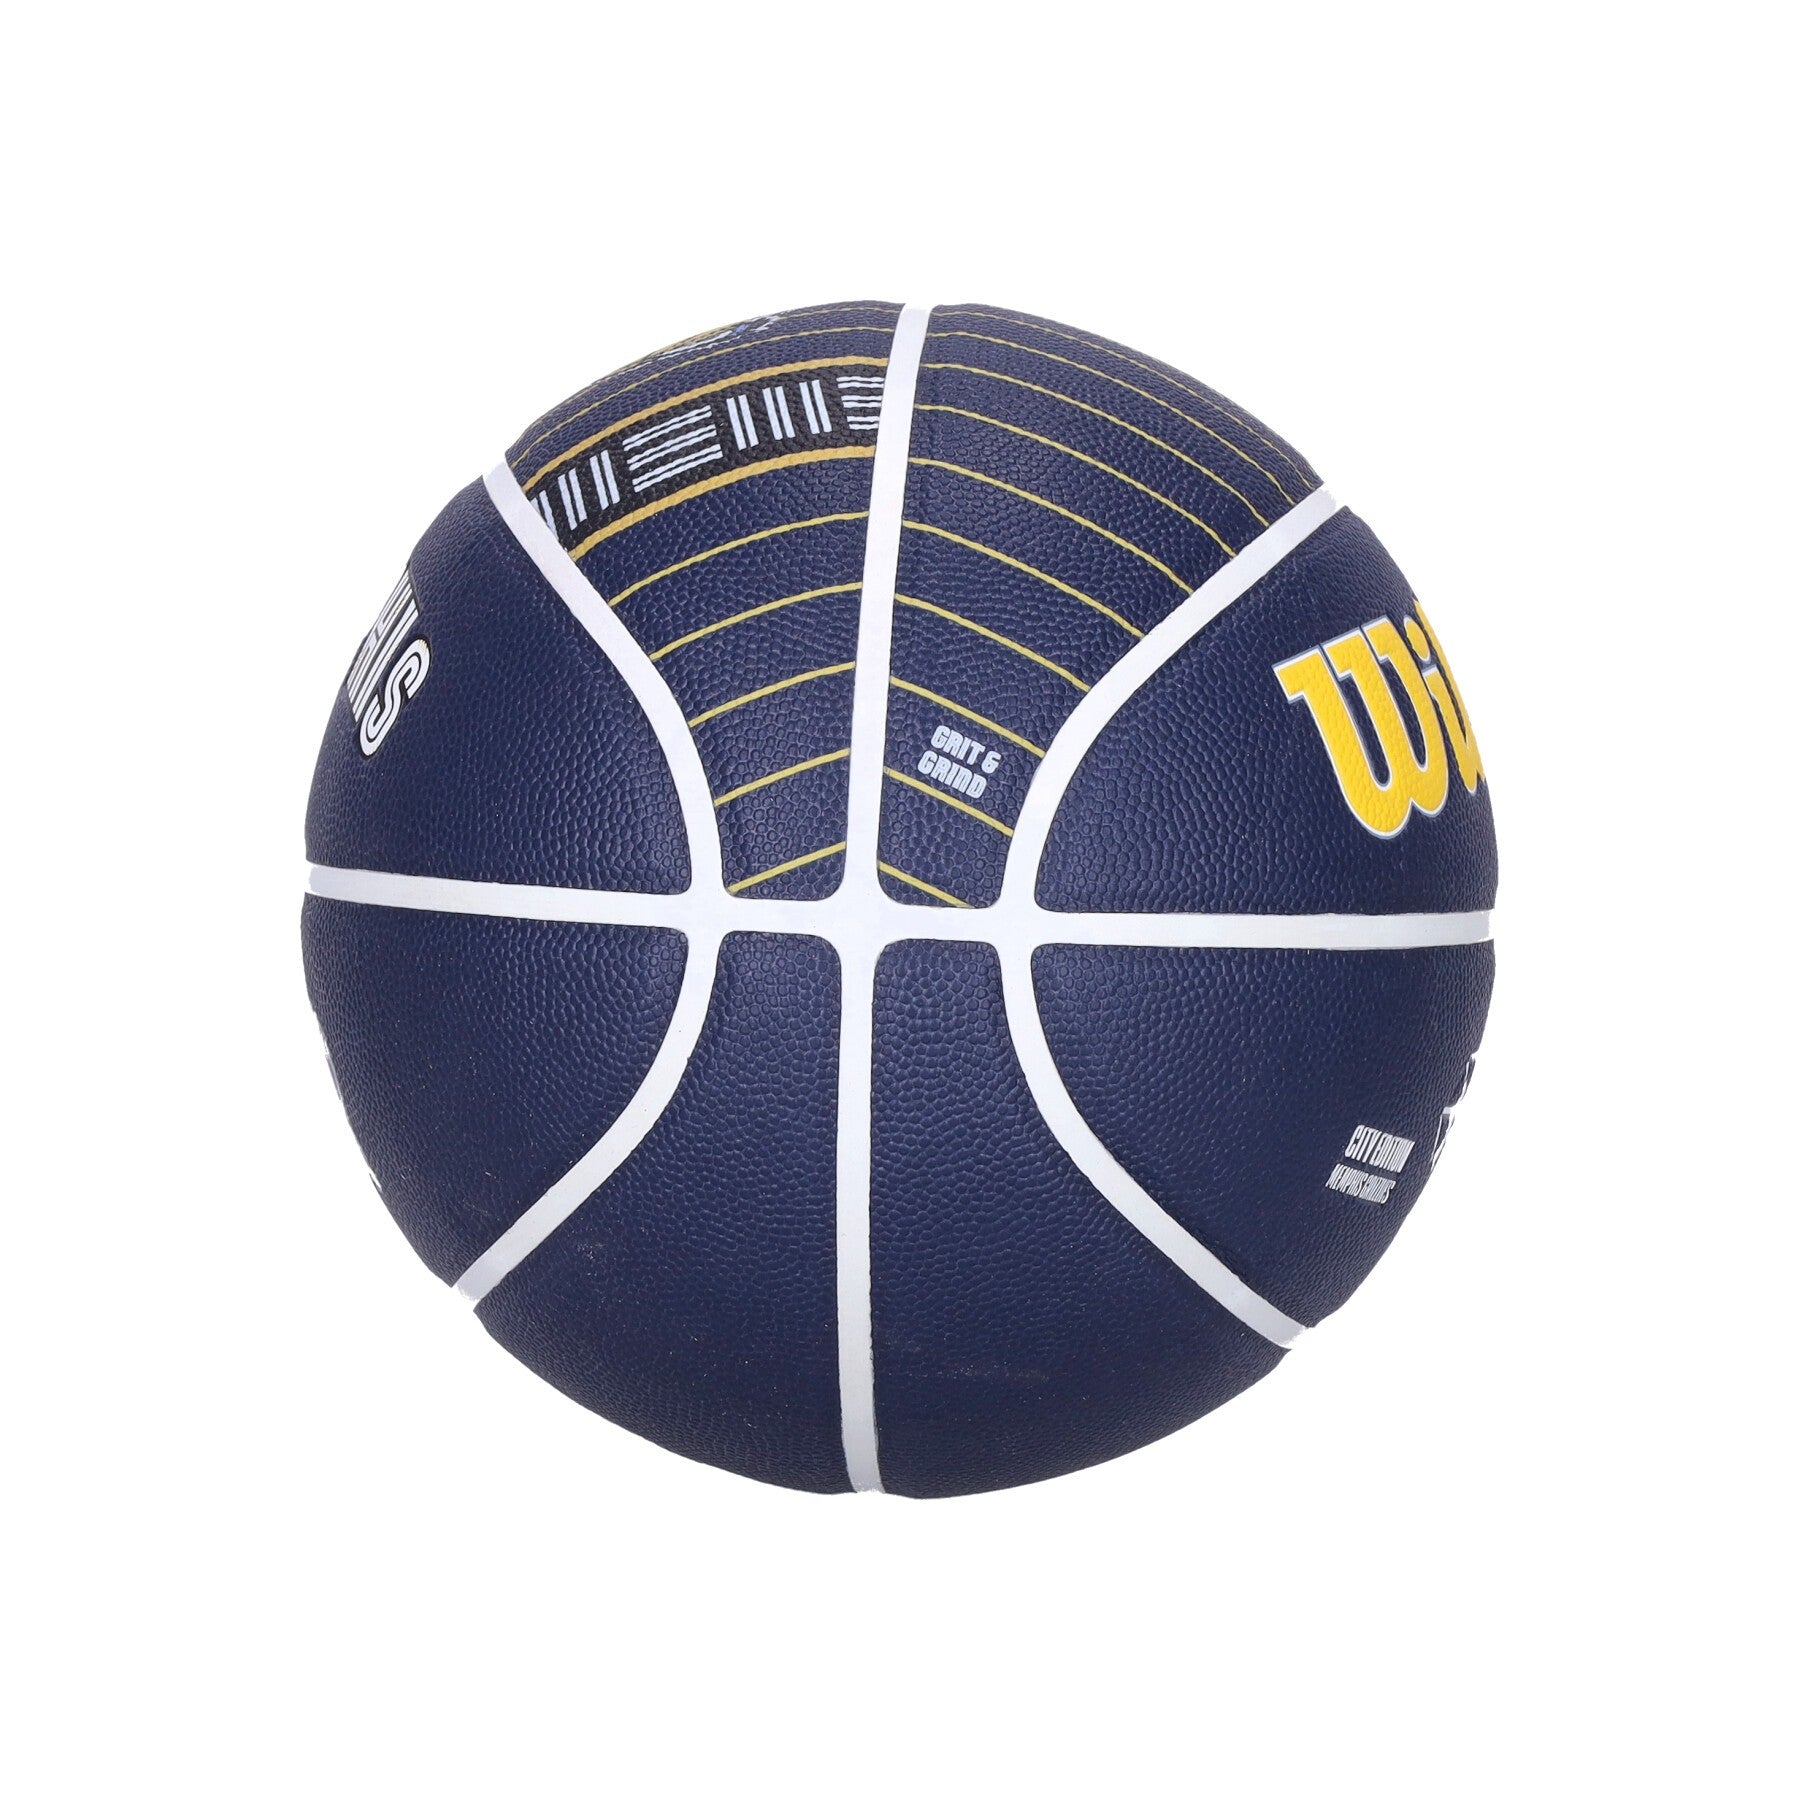 Men's NBA Team City Collector Ball Size 7 Memgri Original Team Colors